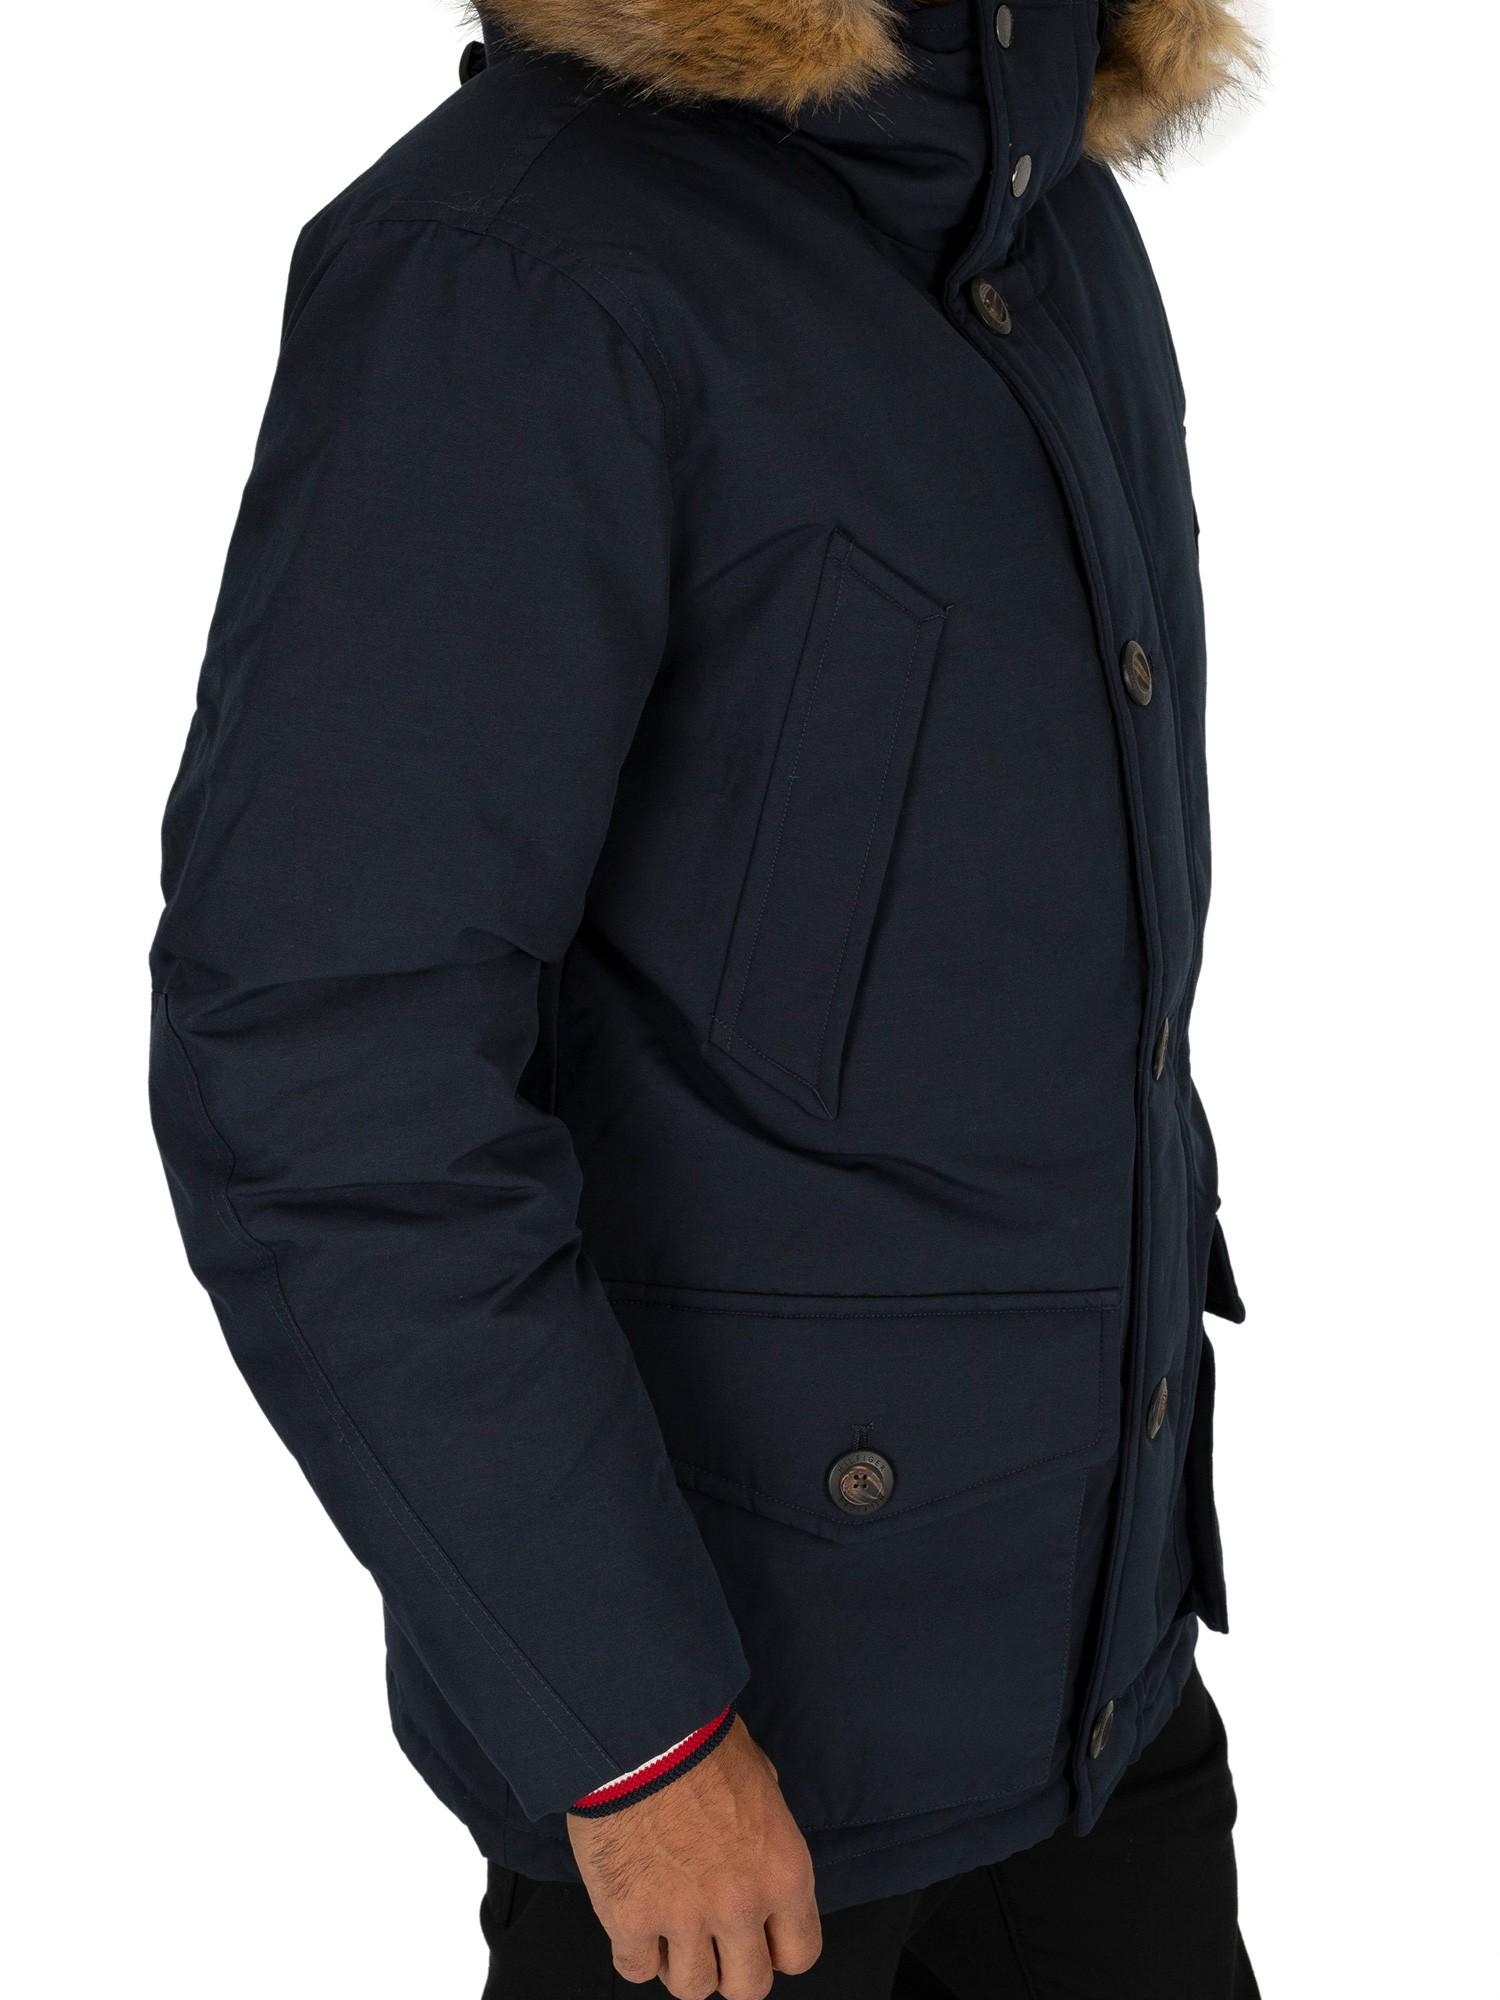 Tommy Hilfiger Rubber Hampton Down Parka Jacket in Blue for Men - Lyst